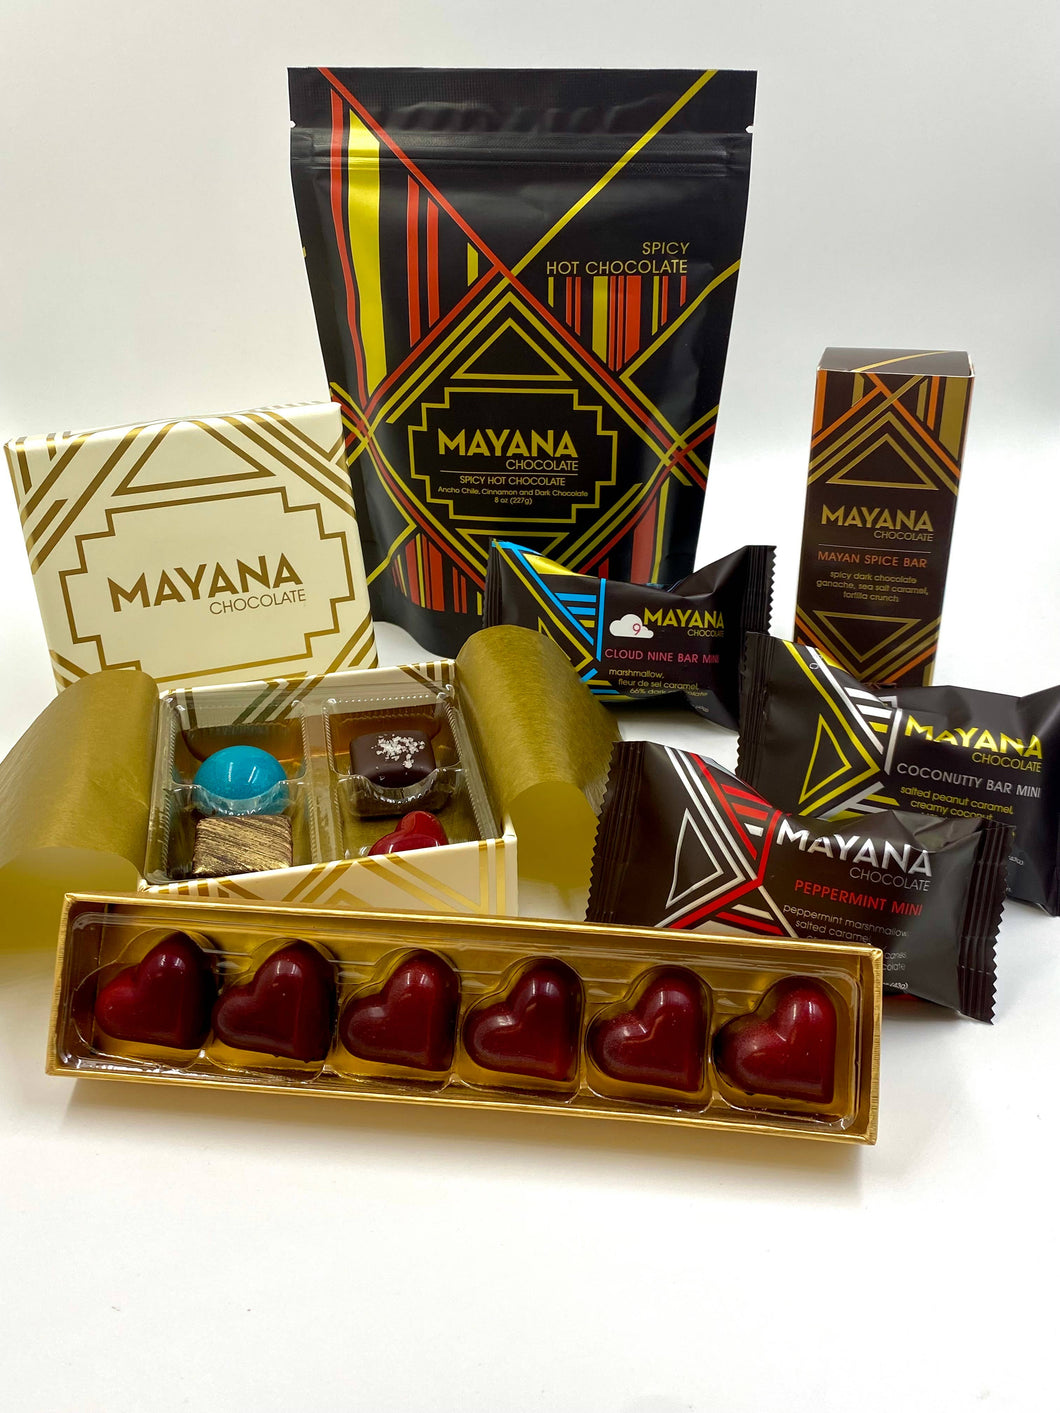 Mayana Chocolate - Lover's Spice Valentine's Day Box